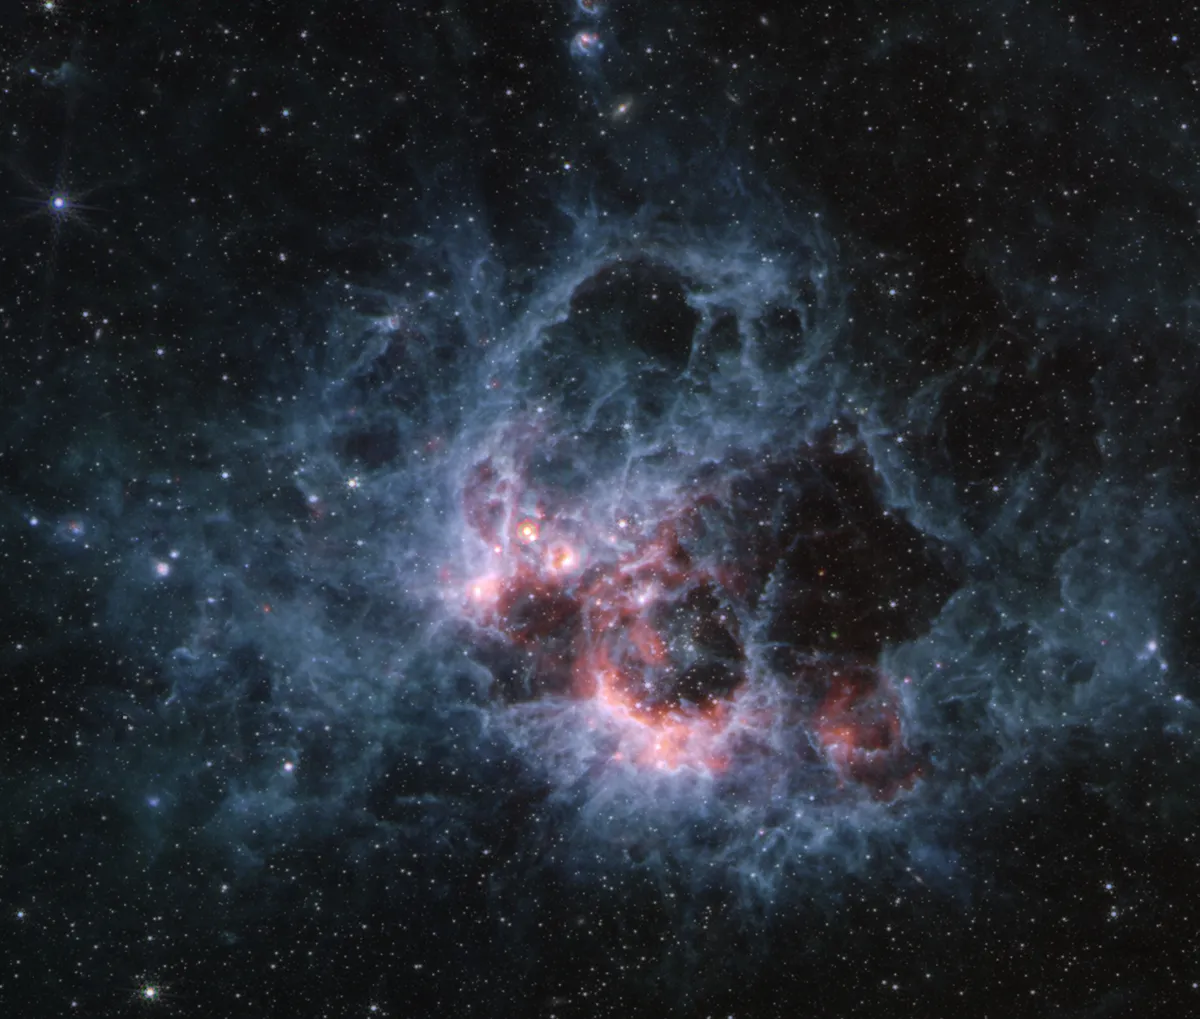 James Webb Space Telescope MIRI image of NGC 604 in the Triangulum Galaxy. Credit: NASA, ESA, CSA, STScI